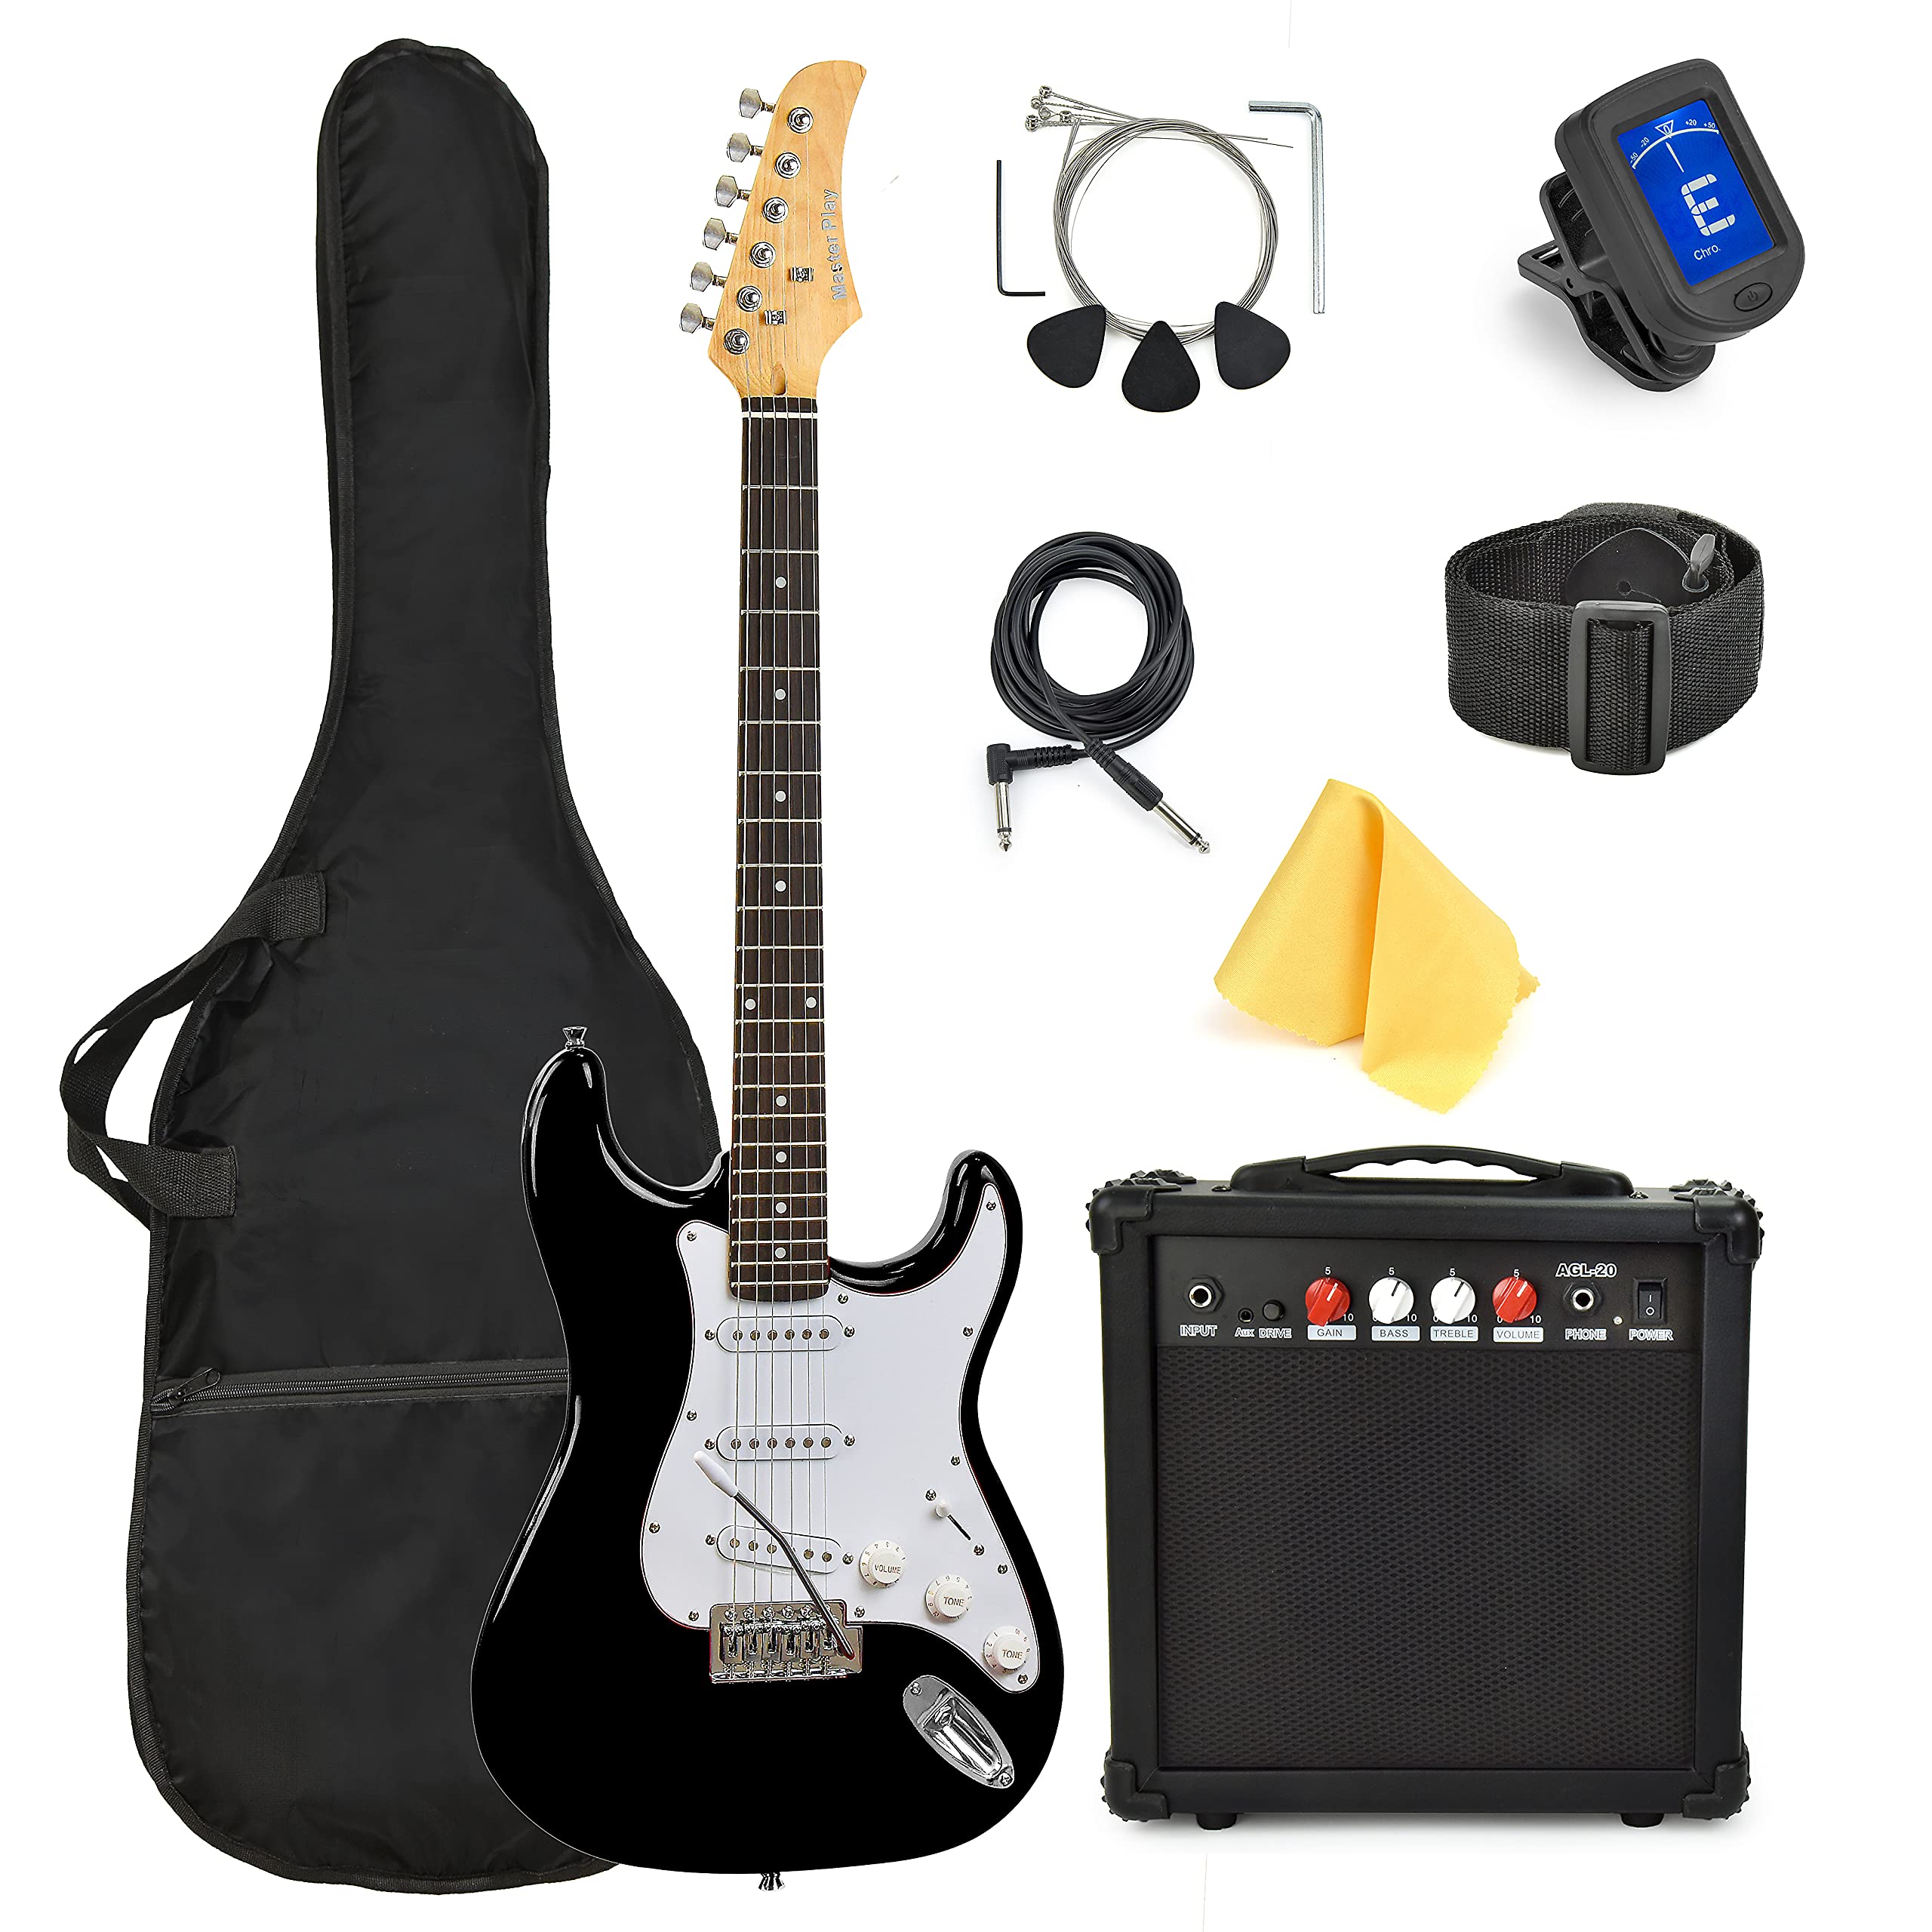 Master Play 39 Inch Electric Guitar,For Kids/beginner With Complete Starter Kit, 20 Watt Amp, 6 Extra String, Picks, Gig Bag, Shoulder Strap, Digital tuner, Cable, Wash Cloth  - Like New